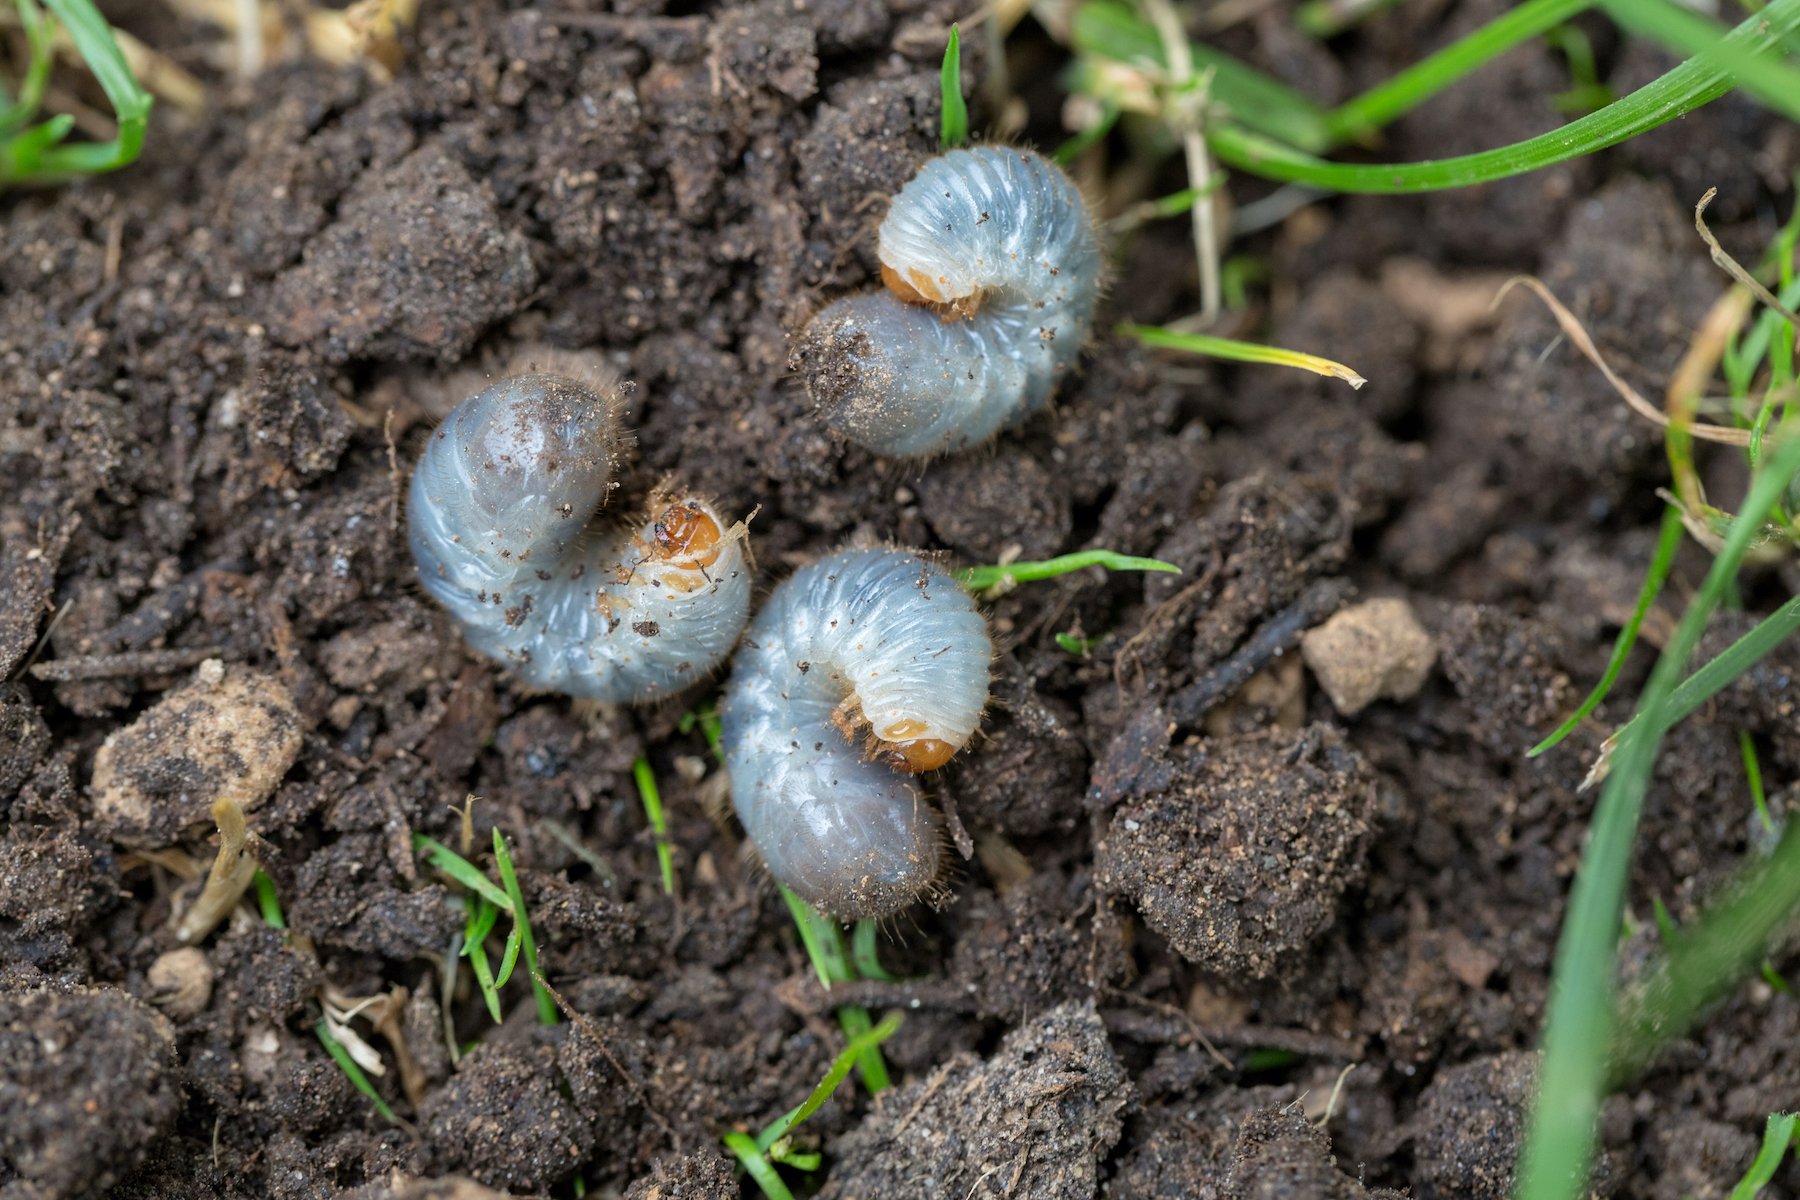 grubs-burrowing-into-soil